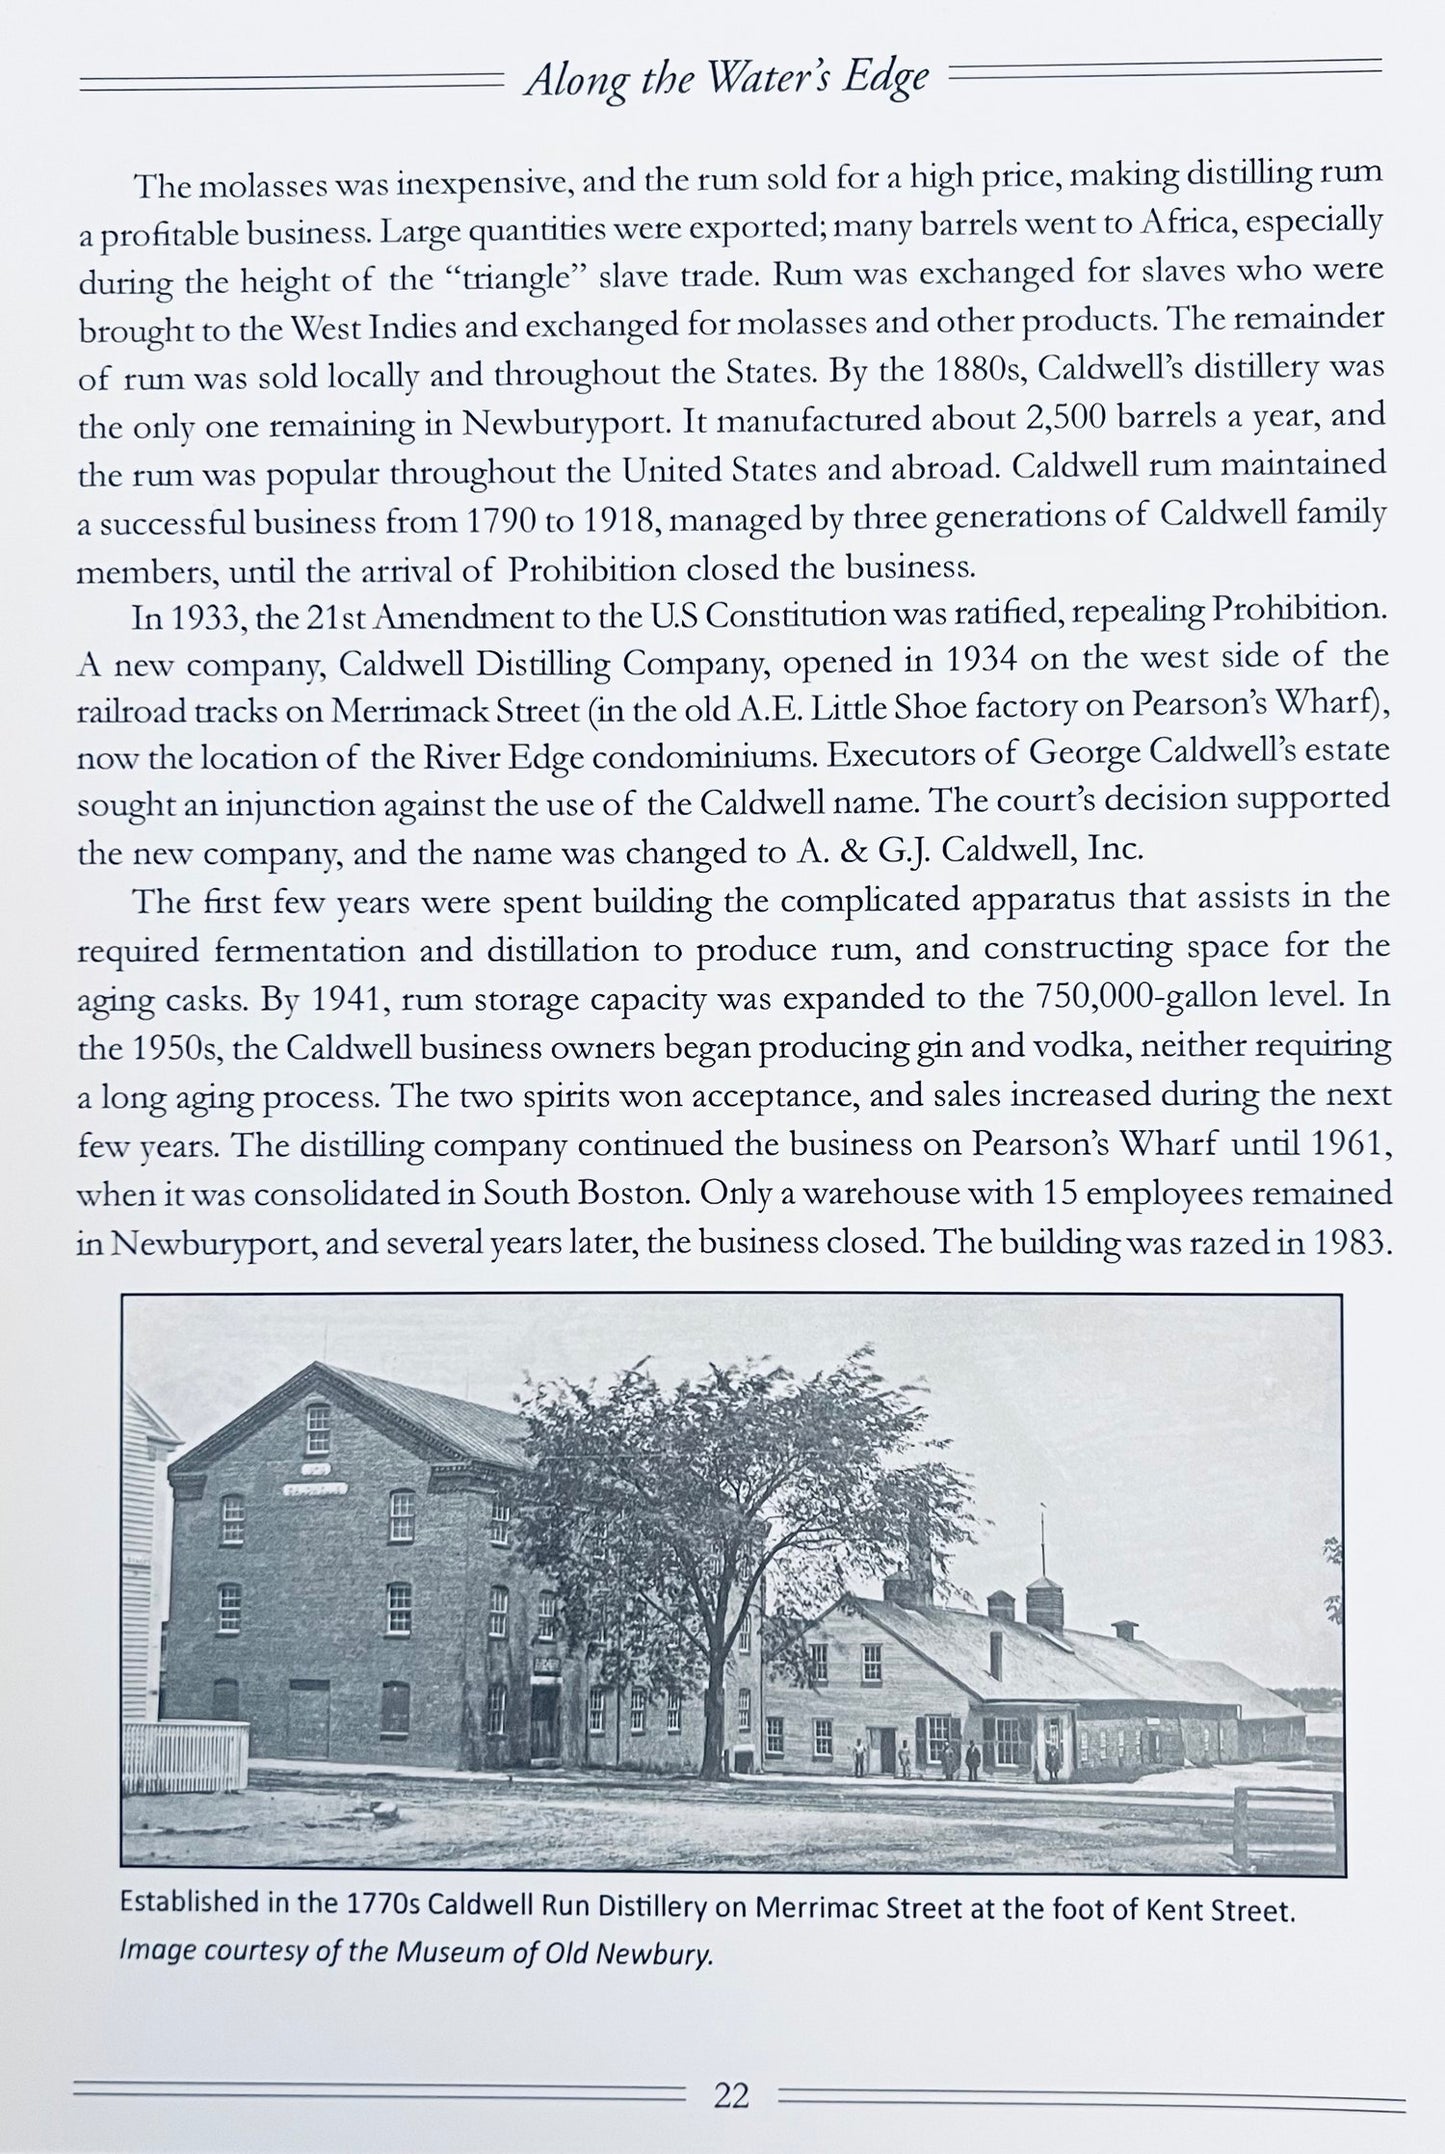 Newburyport Clipper Heritage Trail | Volume 2